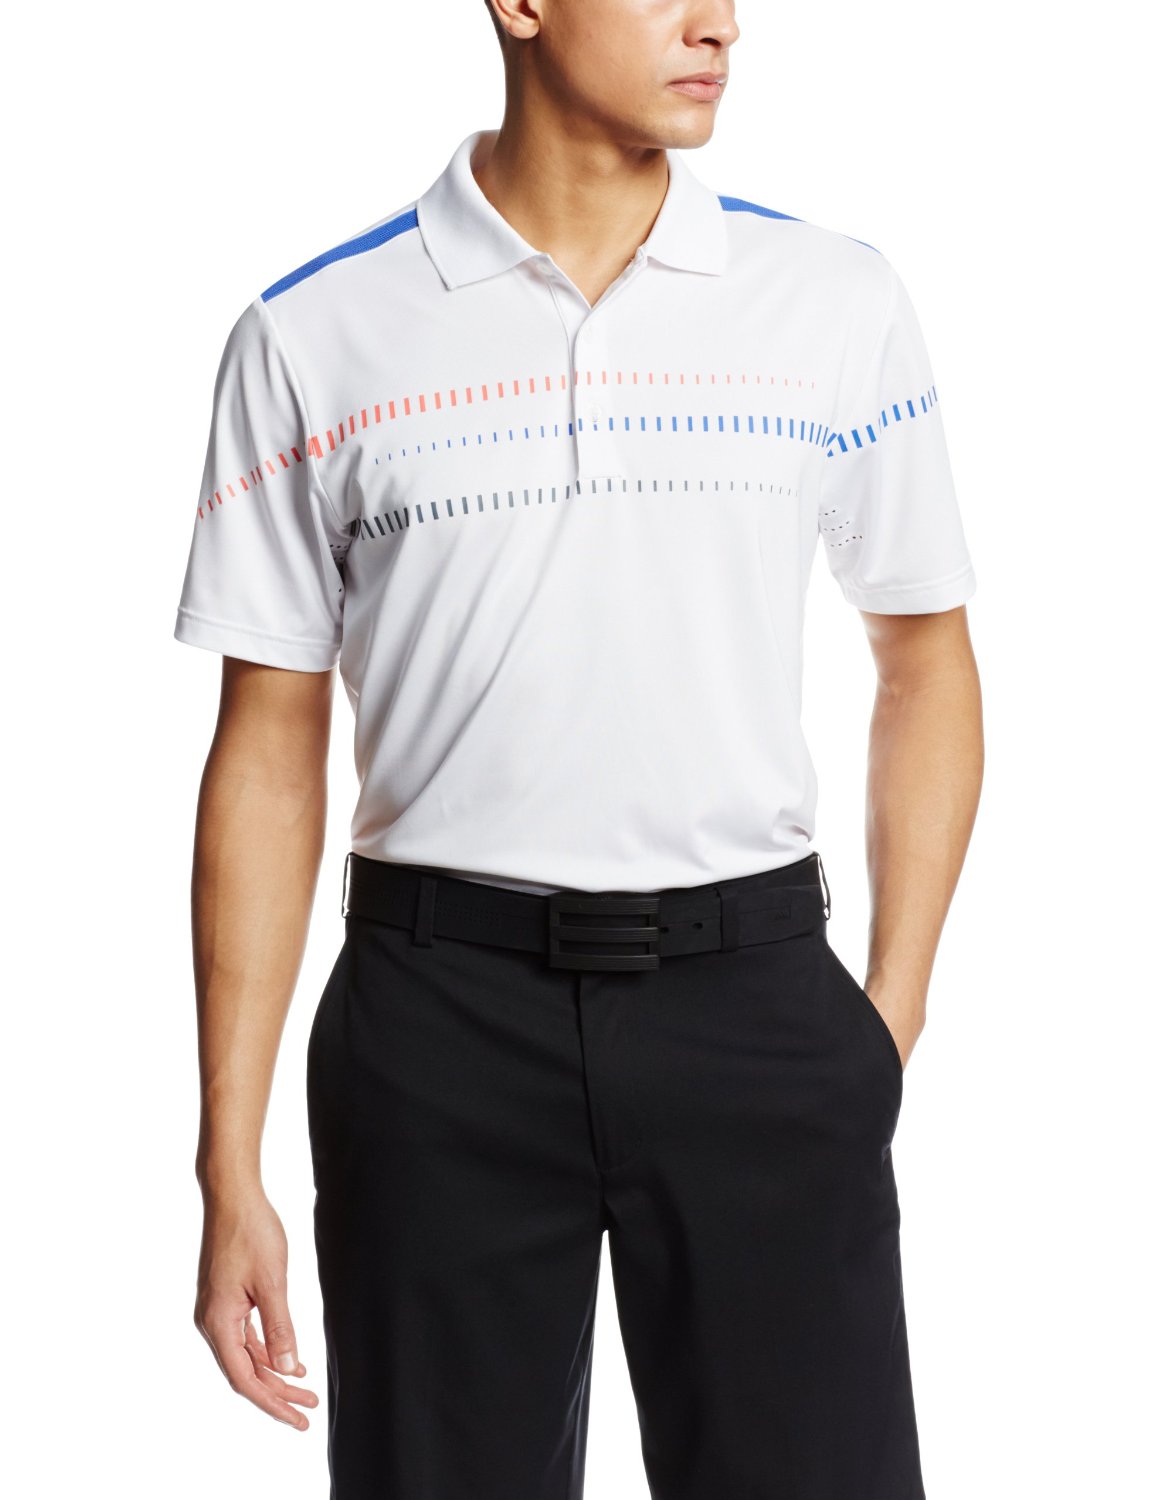 Adidas Mens Puremotion Tour Climacool Digital Print Golf Polo Shirts